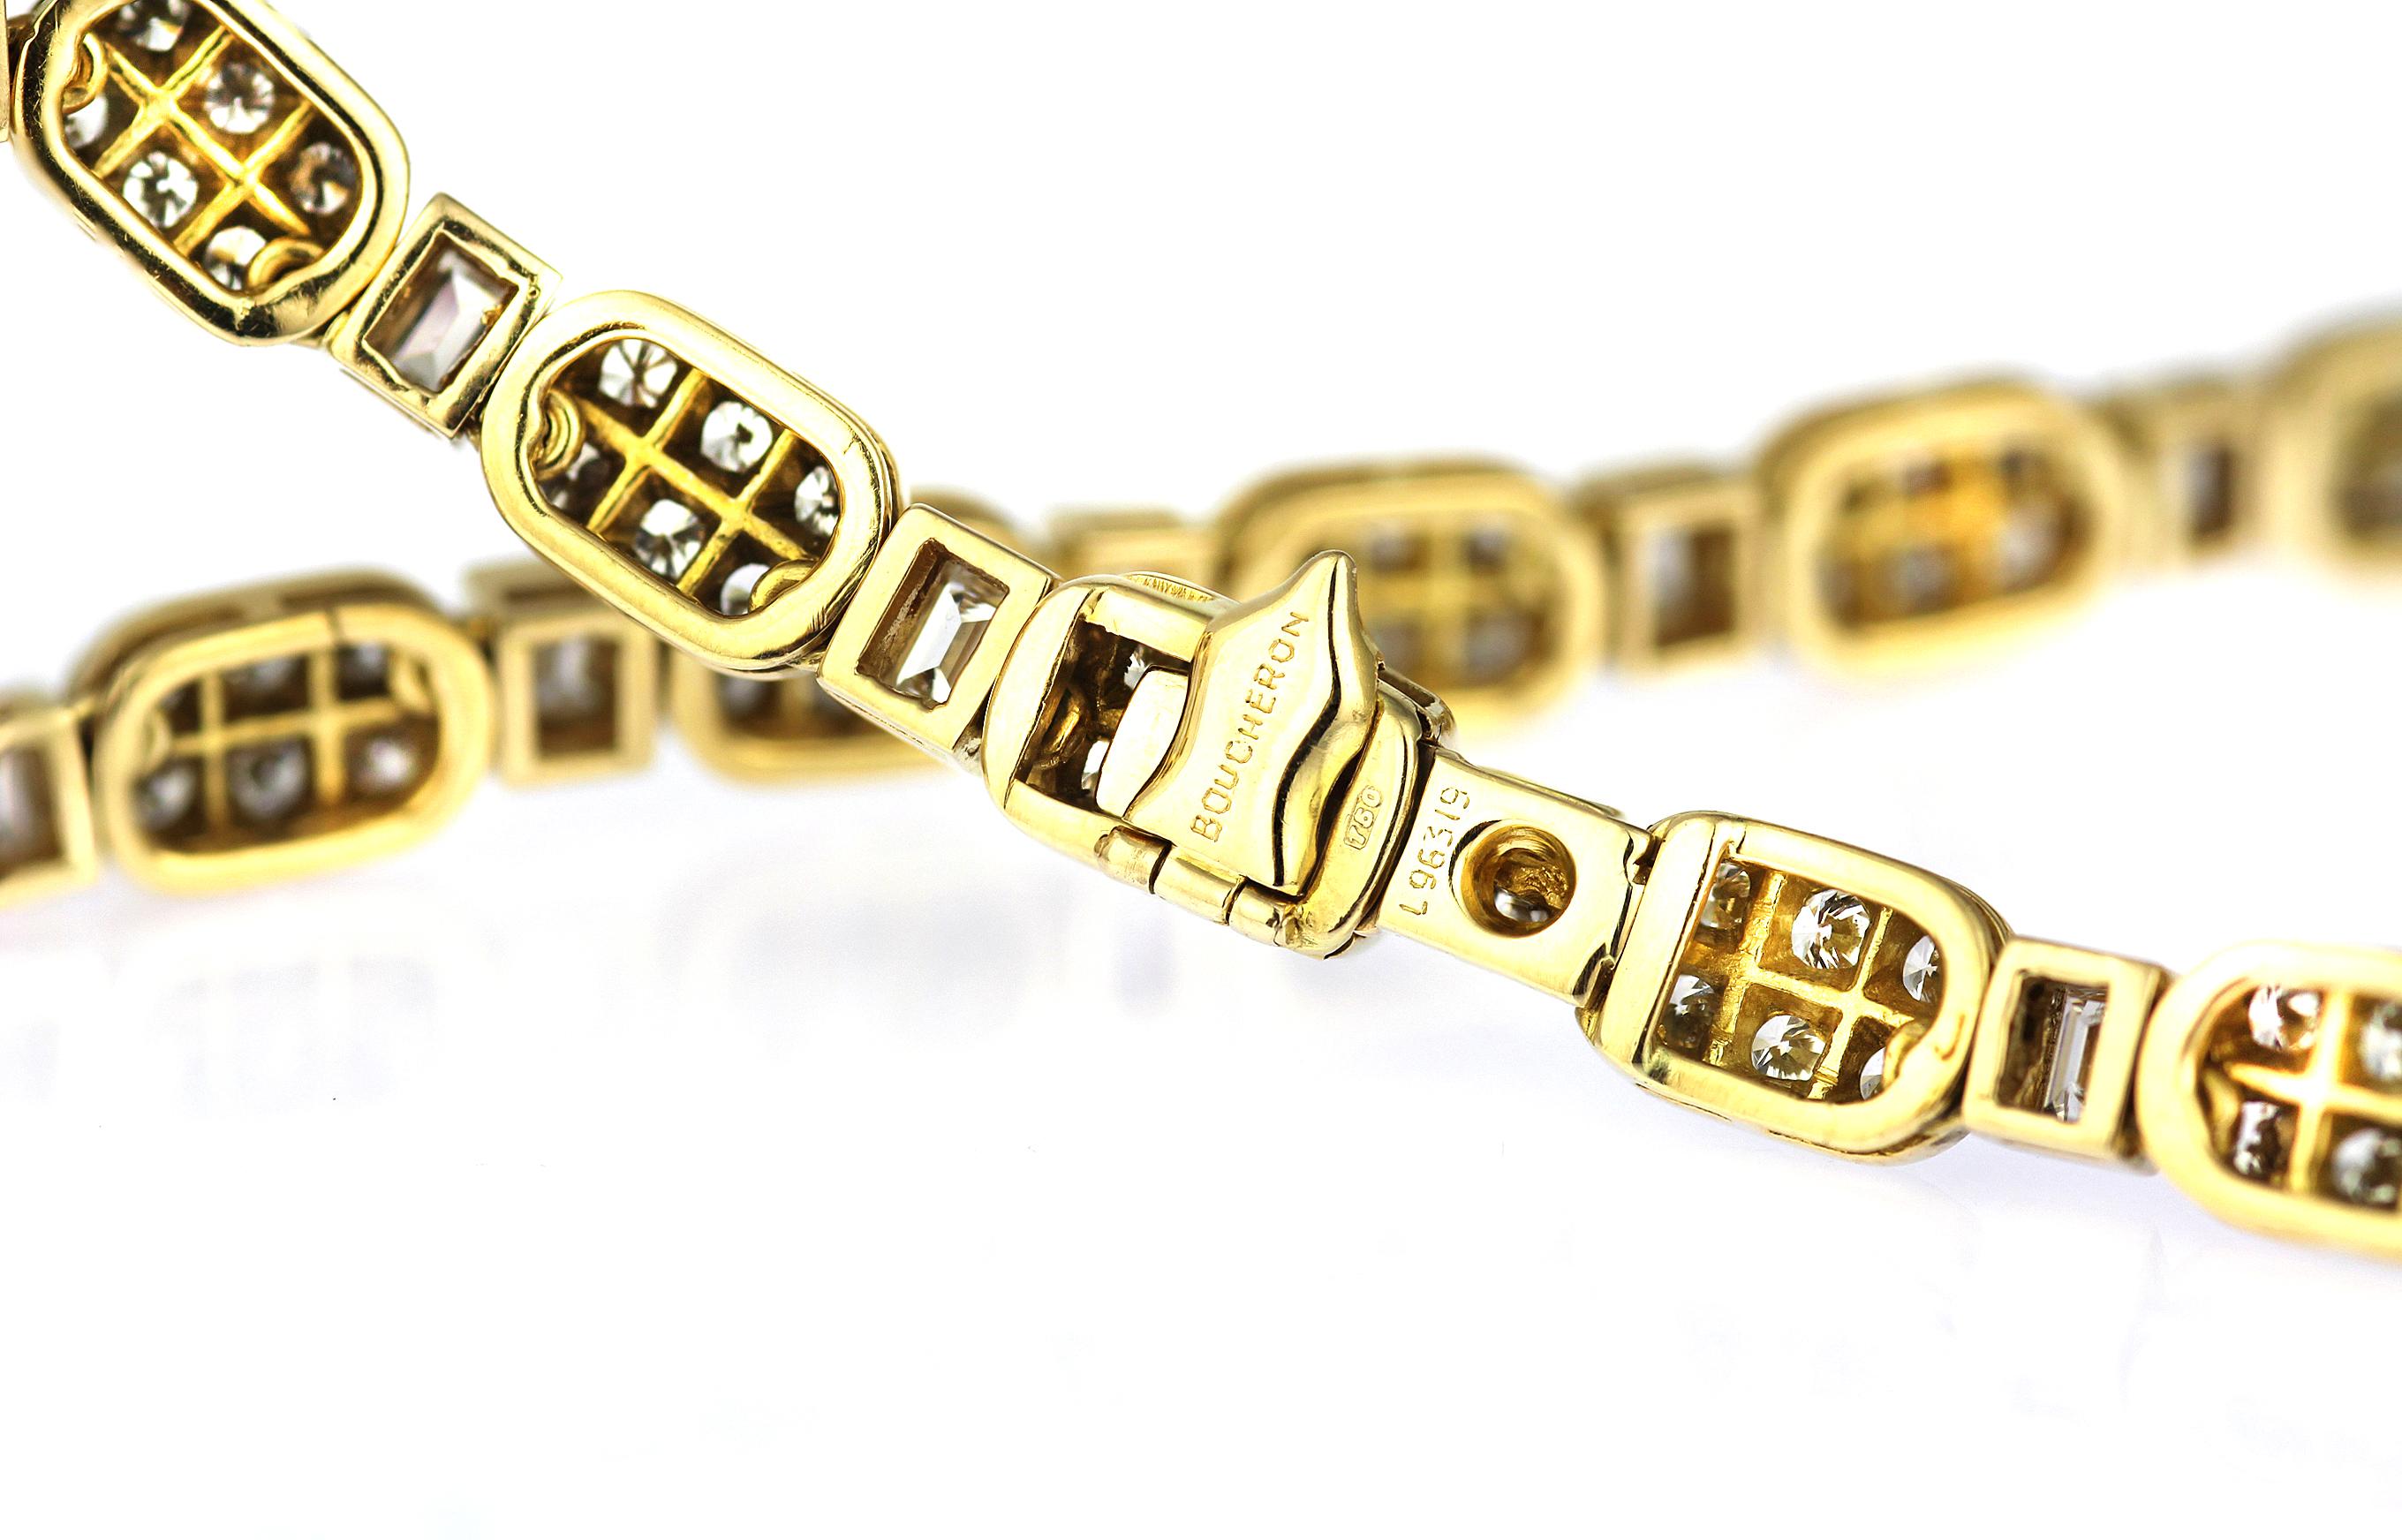 Women's Boucheron, Vintage/Retro Diamond Necklace & Bracelet Set in 18ct Yellow Gold